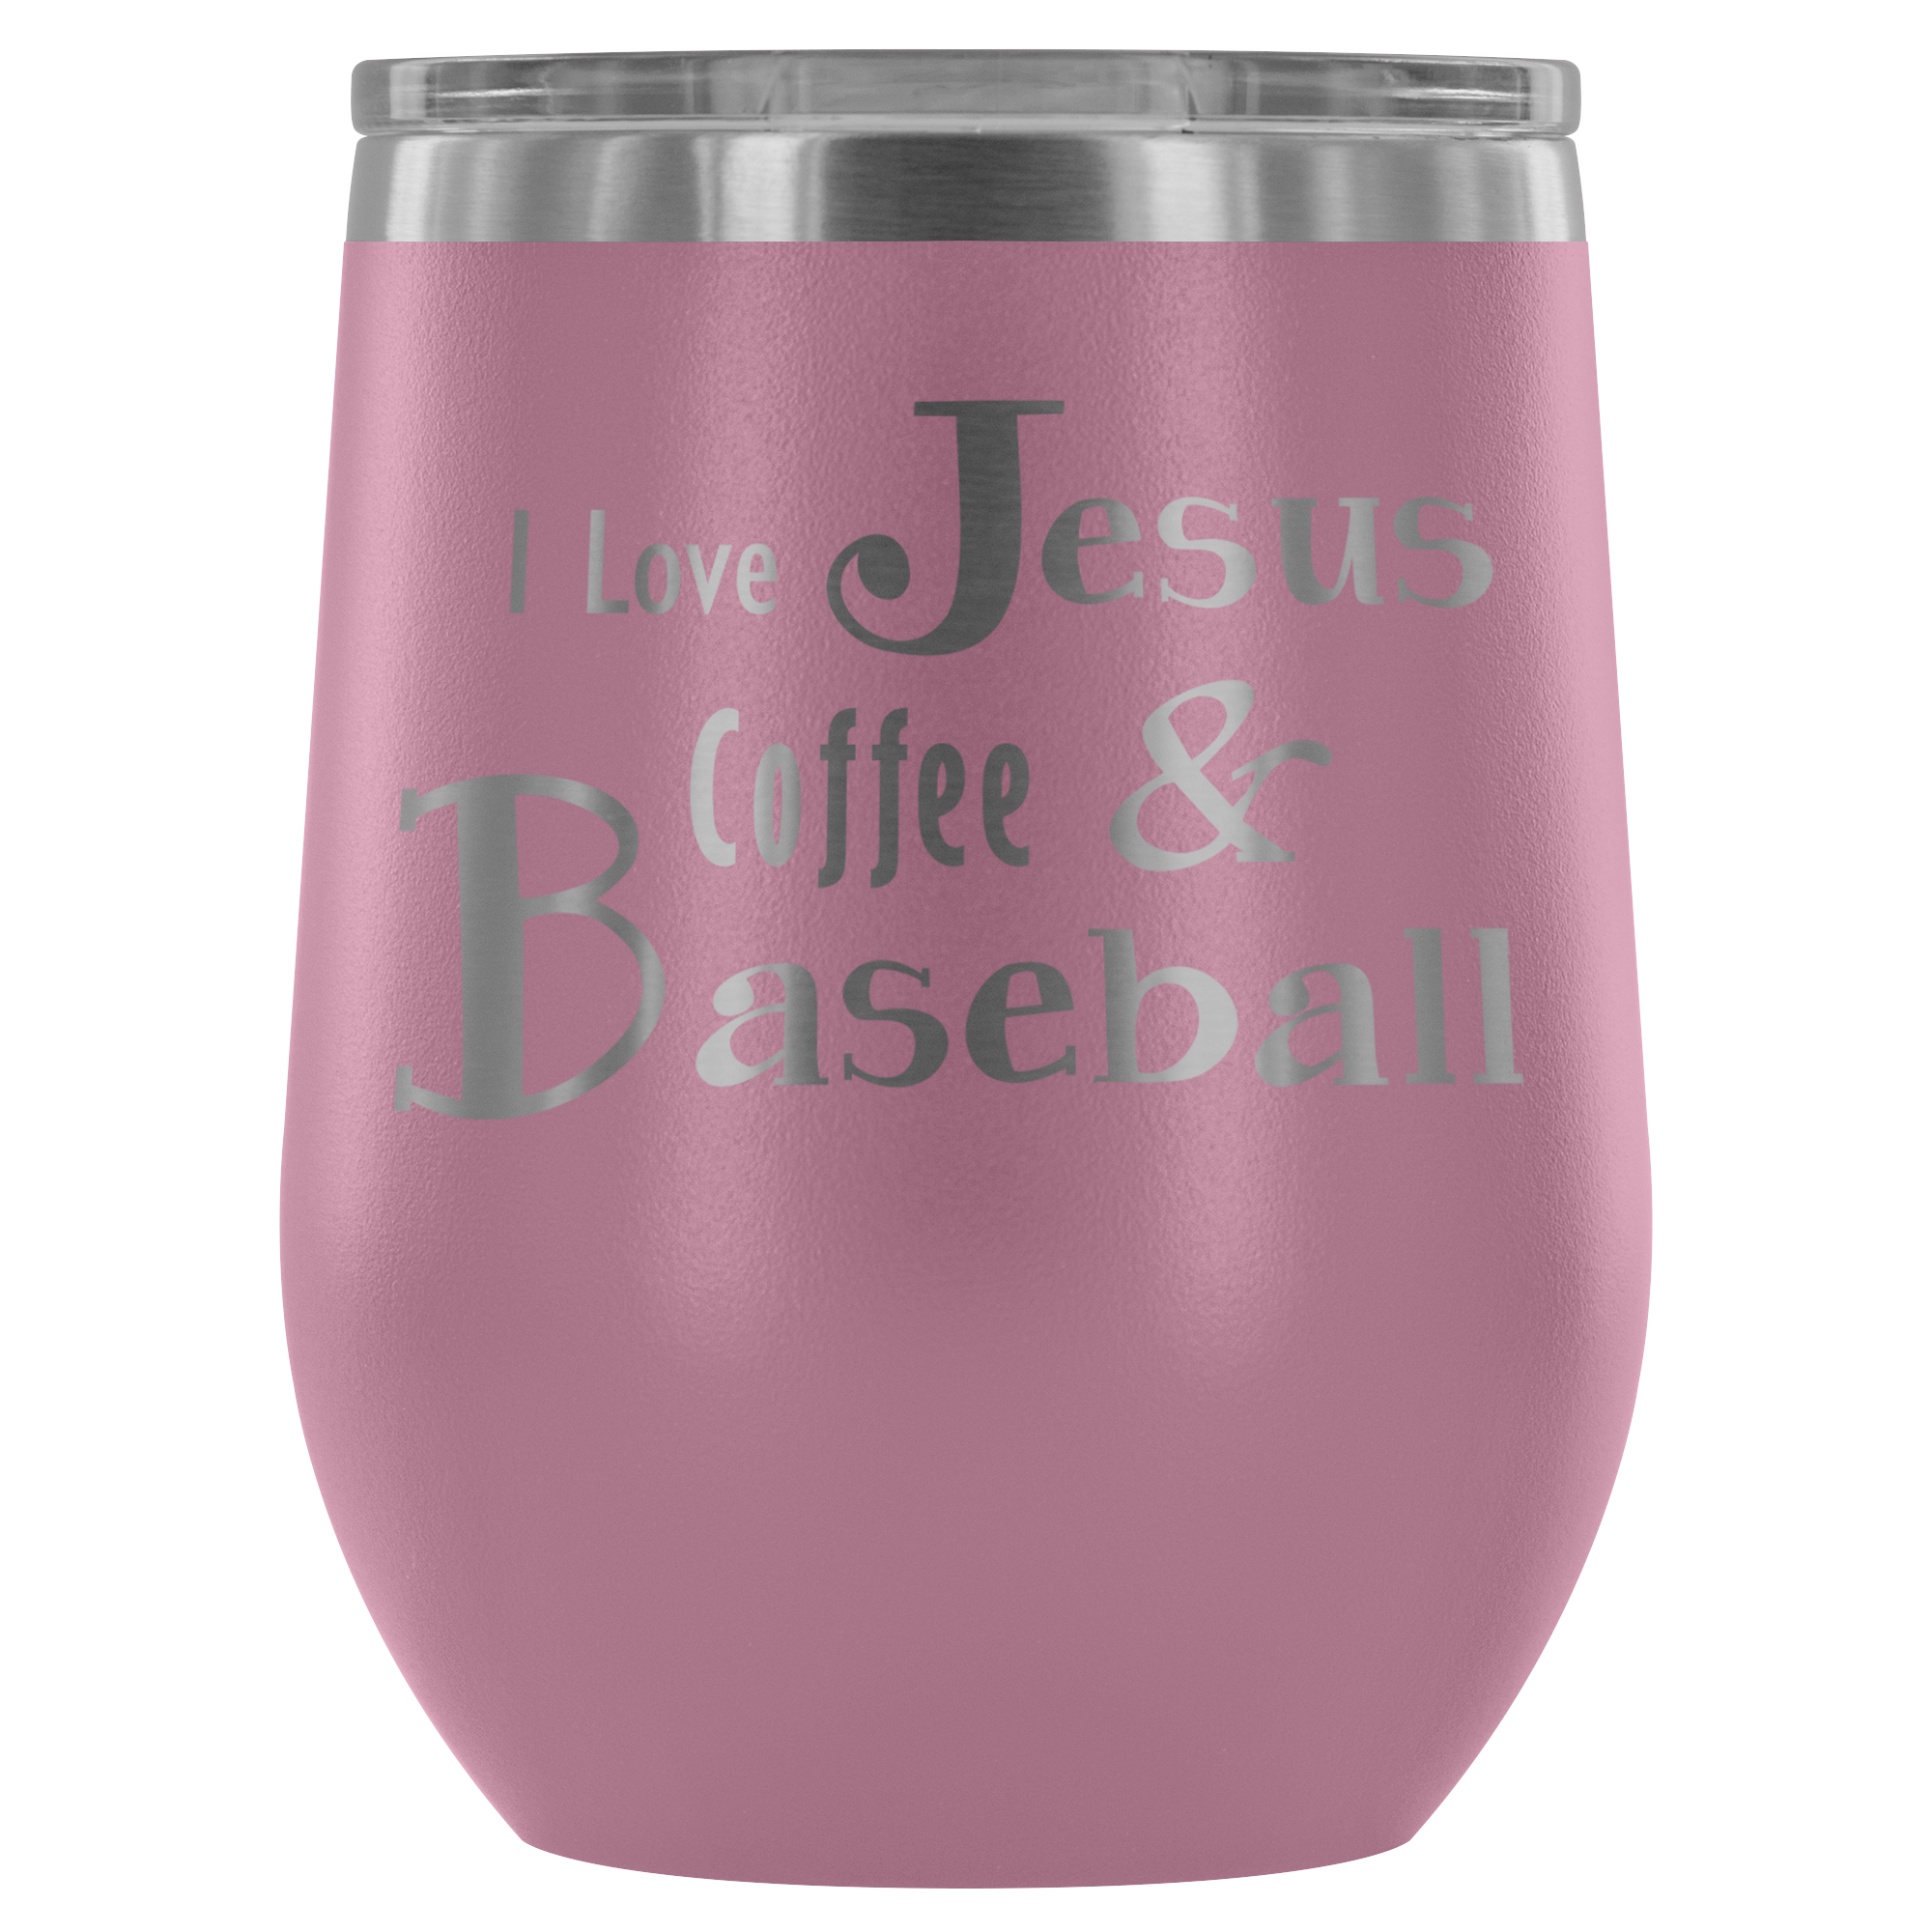 Wine Tumbler_Love Jesus Coffe and Baseball